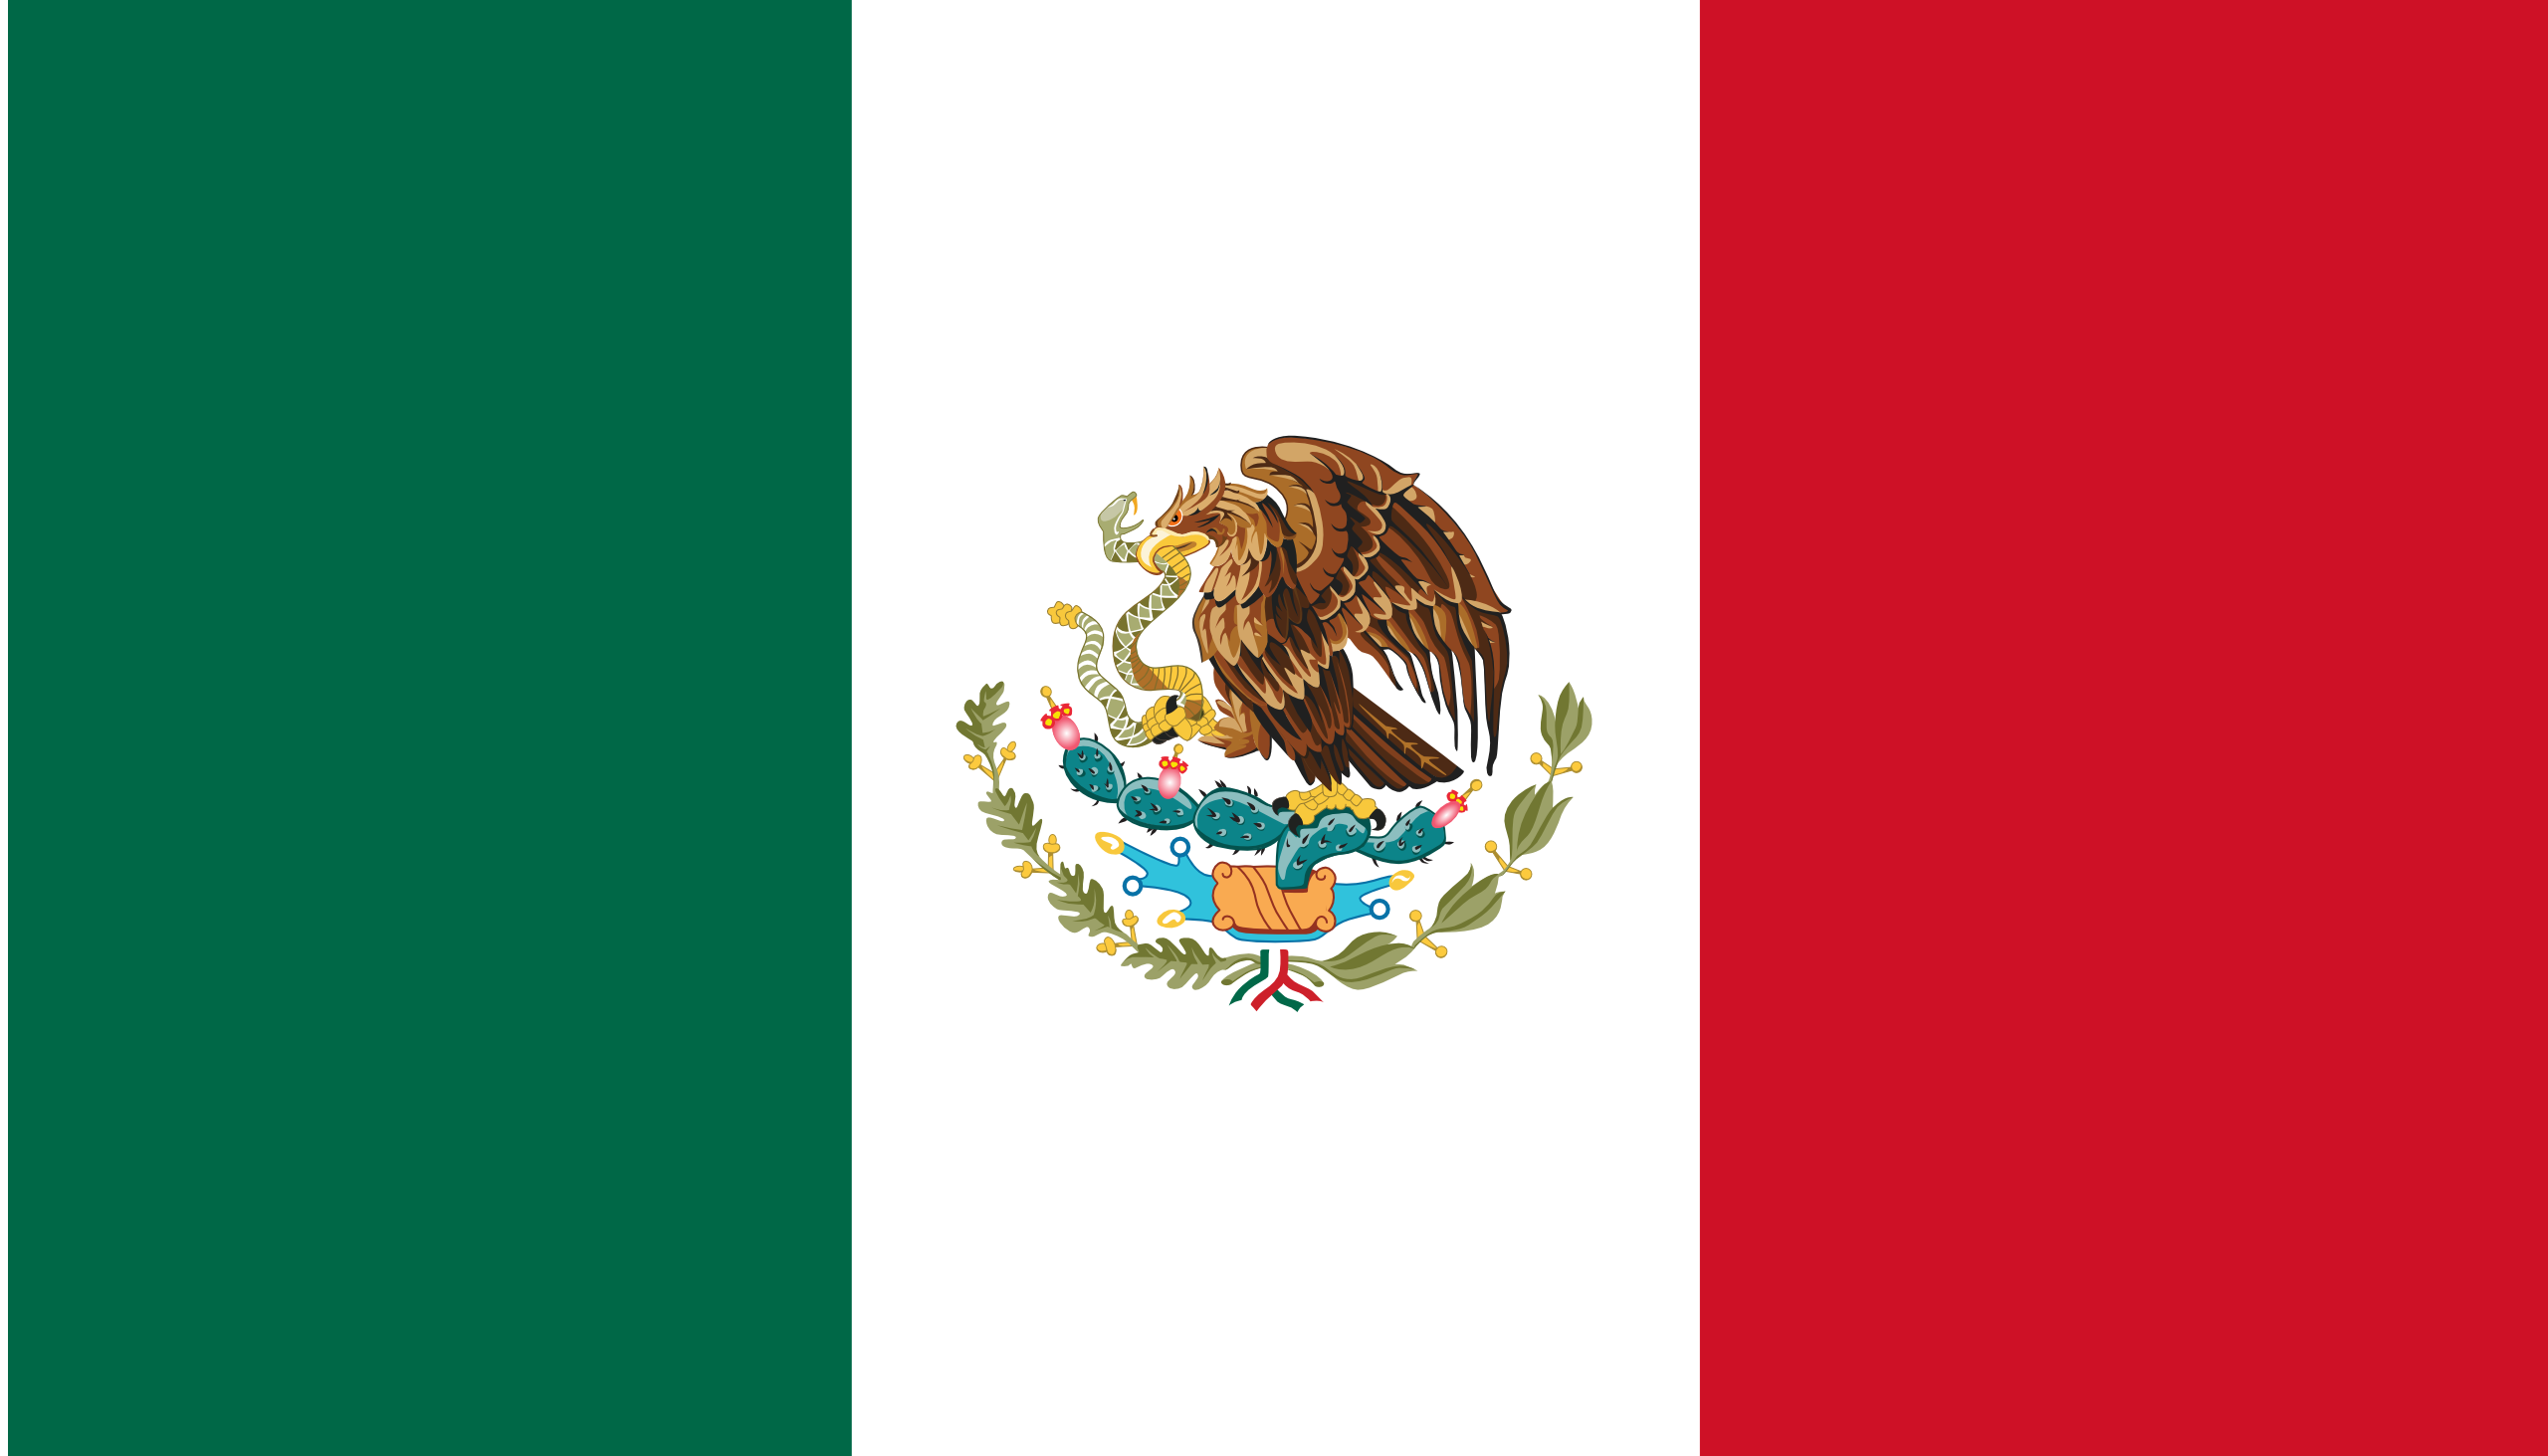 Transfer money to Mexico